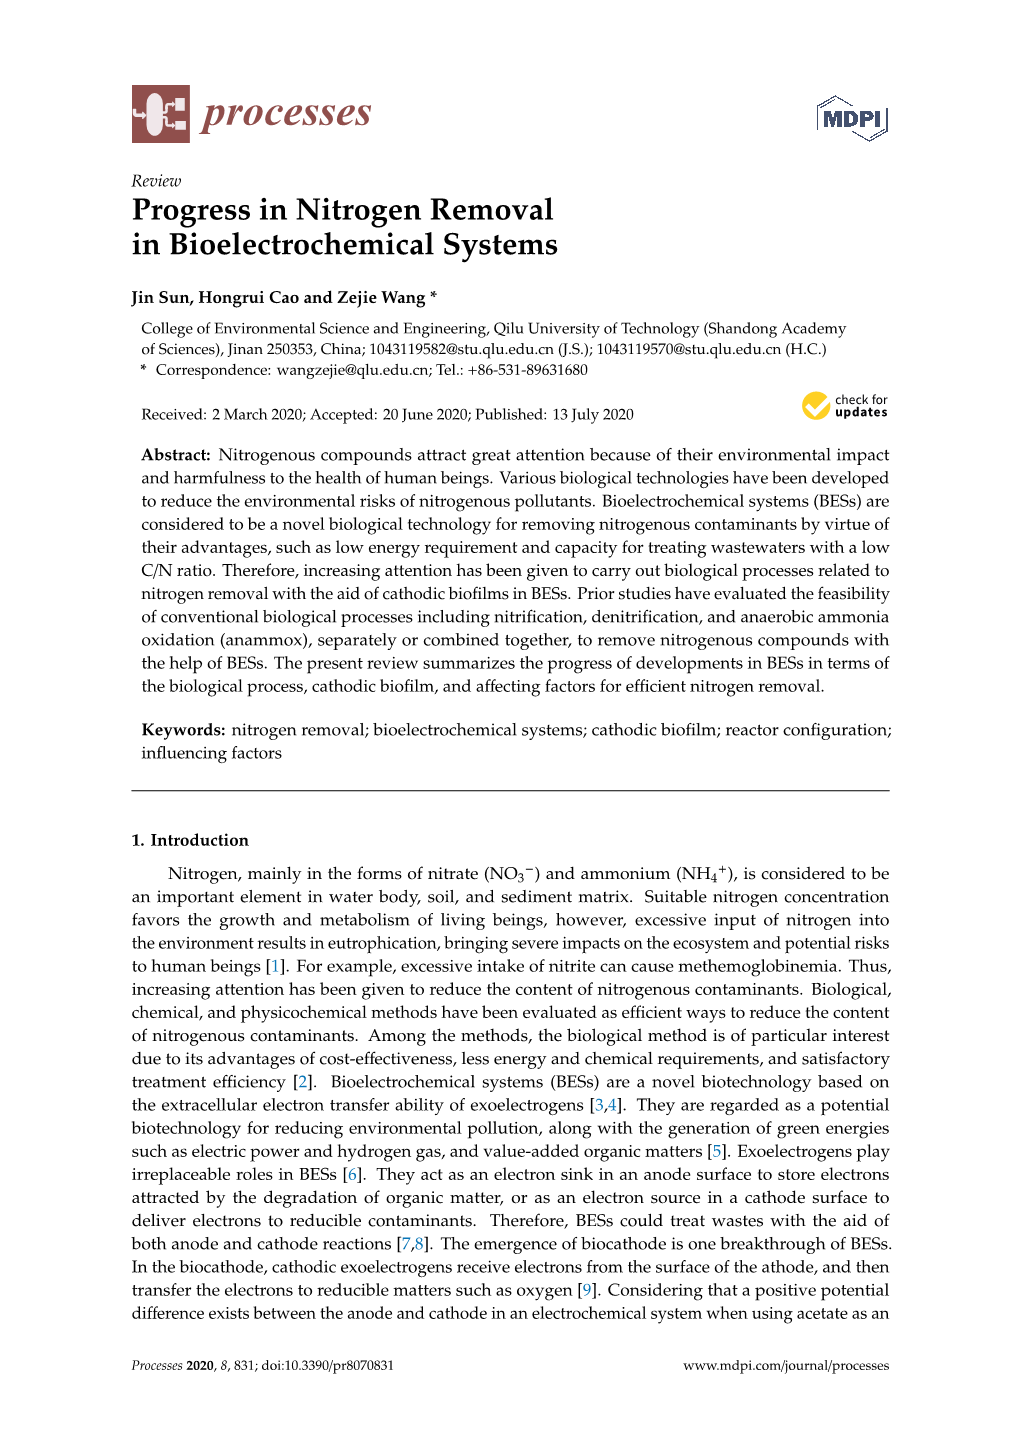 Progress in Nitrogen Removal in Bioelectrochemical Systems